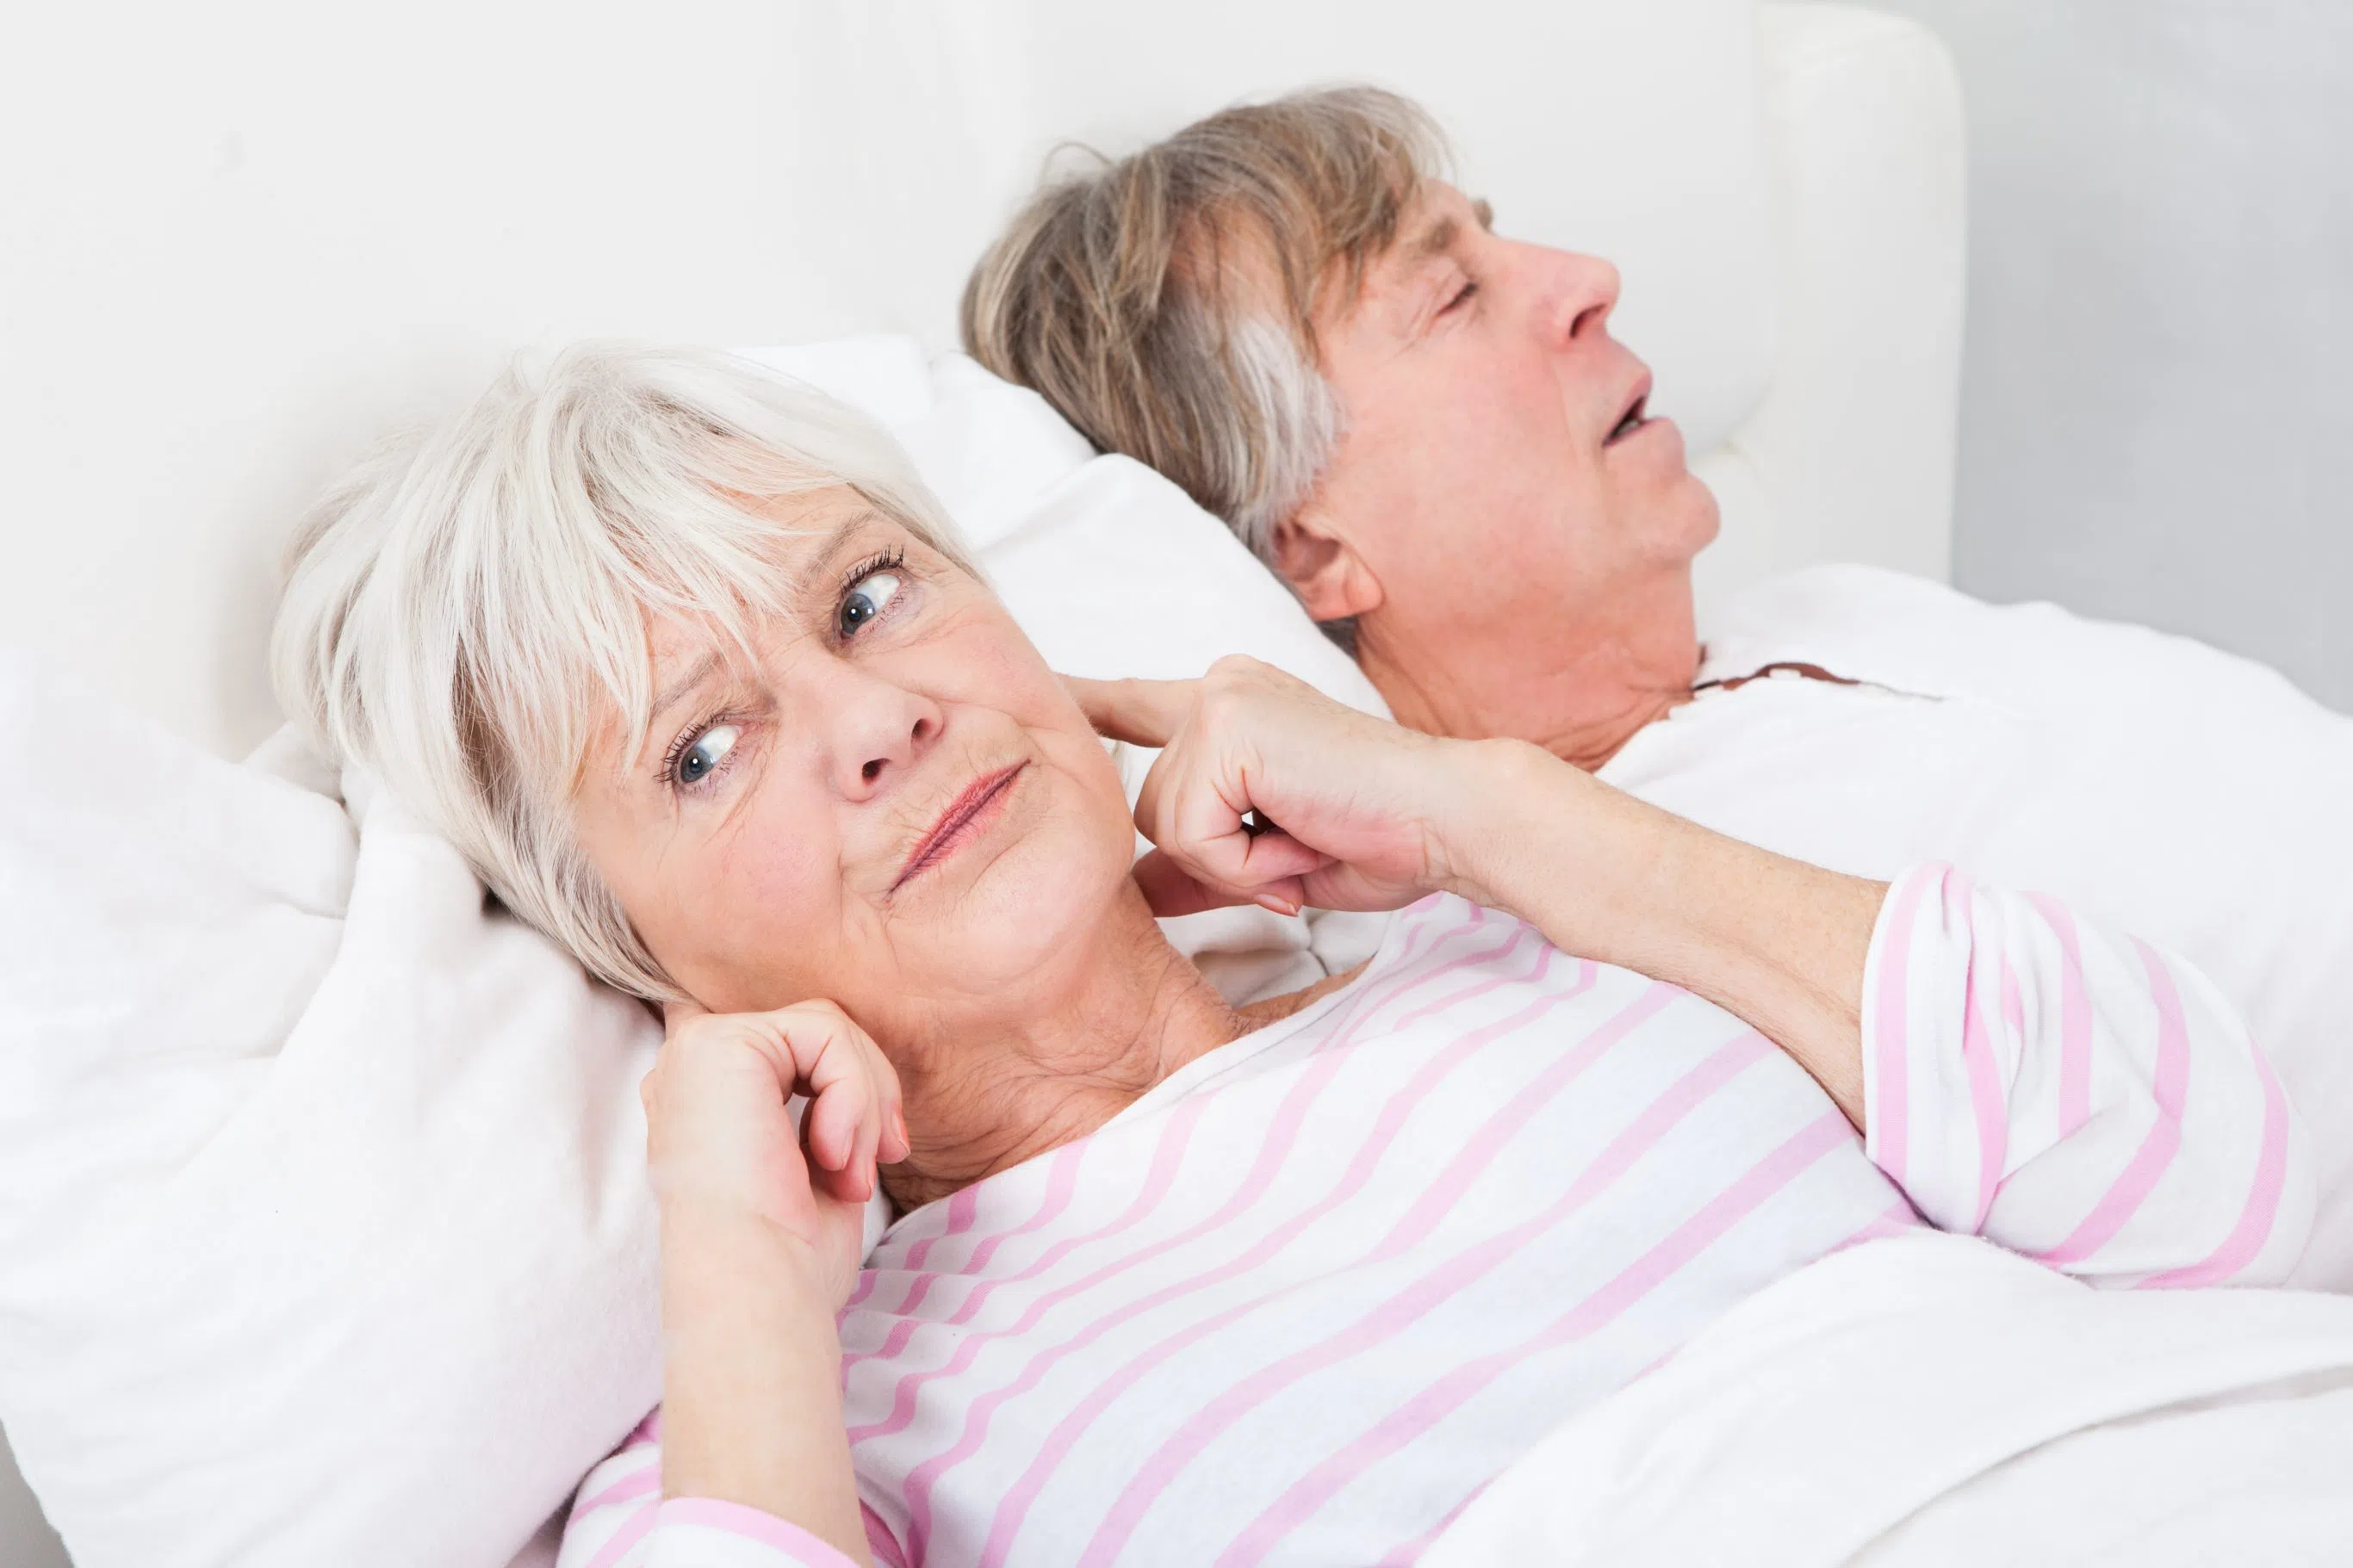 Snoring: Sawing Logs or Serenading the Night?